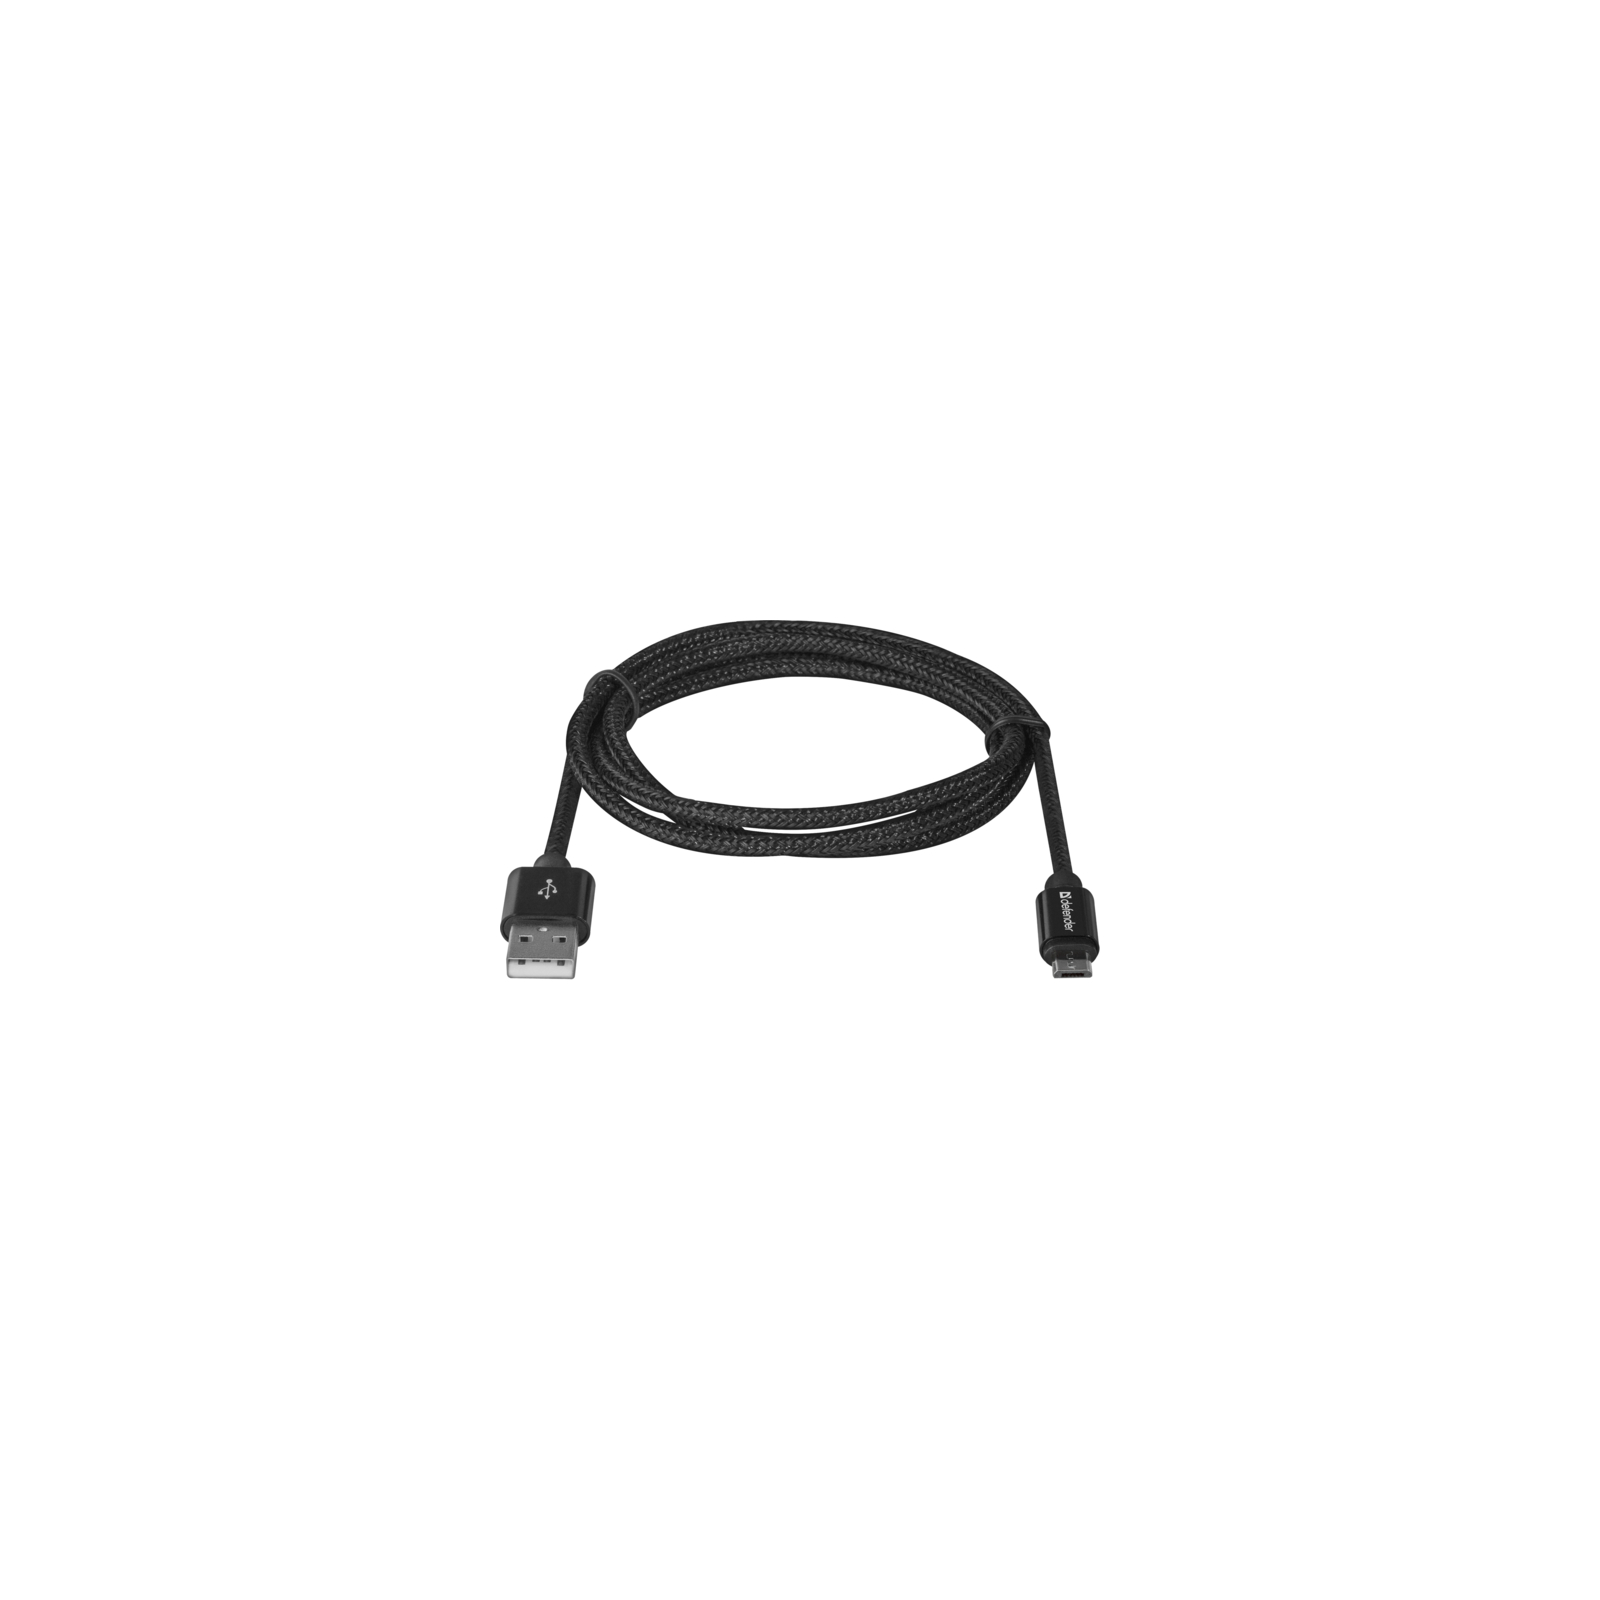 Дата кабель USB 2.0 AM to Micro 5P 1.0m USB08-03T PRO black Defender (87802) изображение 2